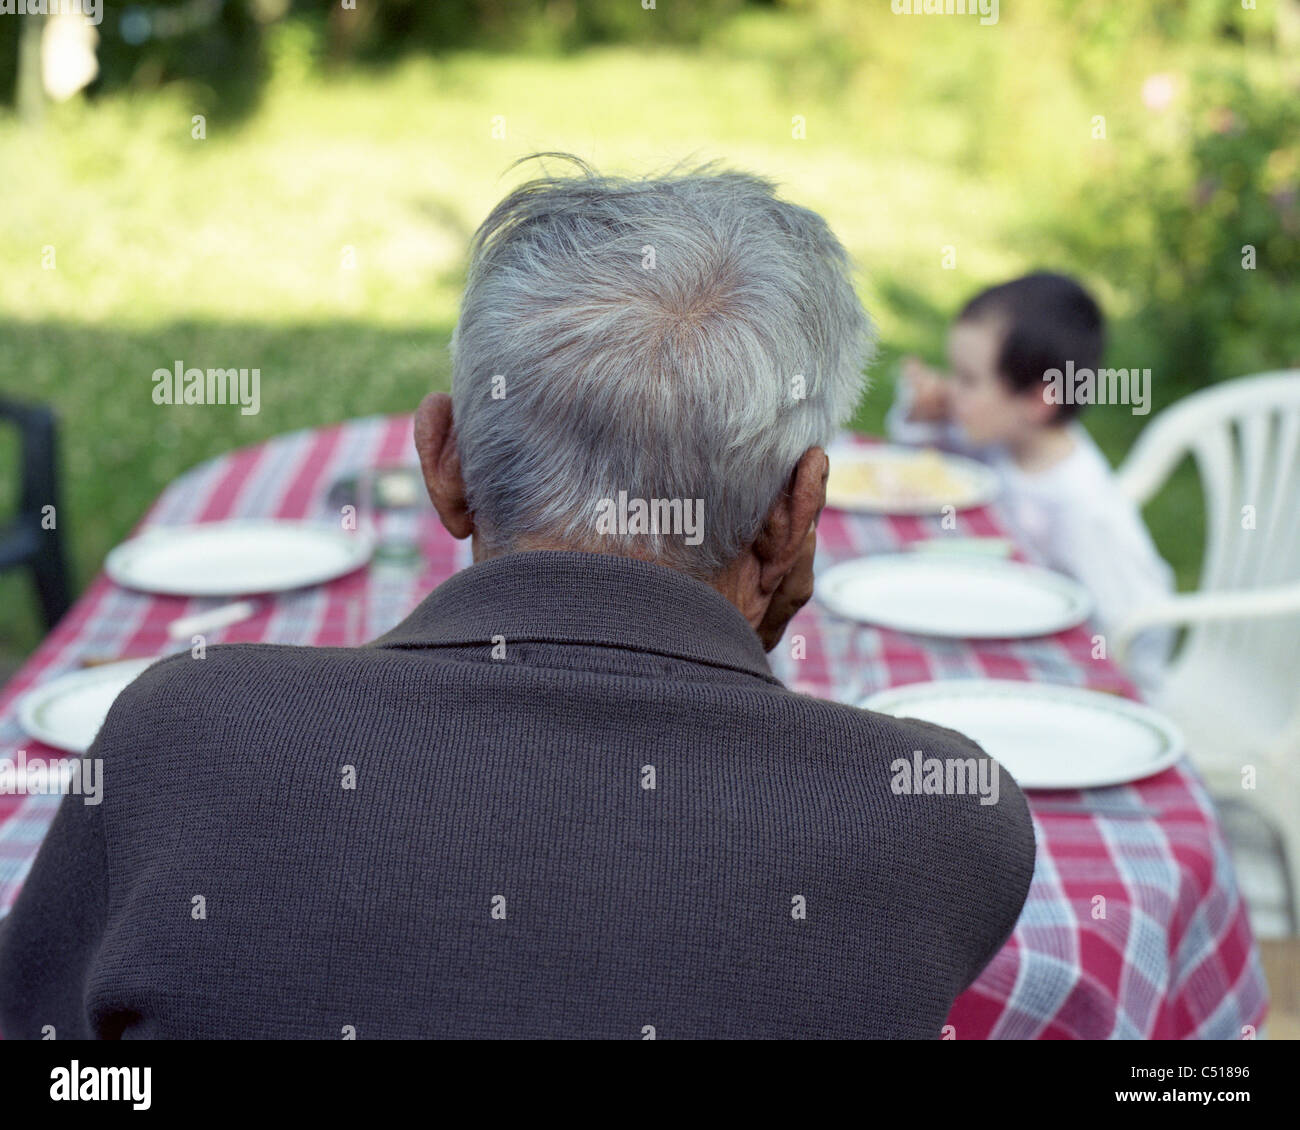 Senior man sitting at table outdoors, contemplating grandchild Stock Photo